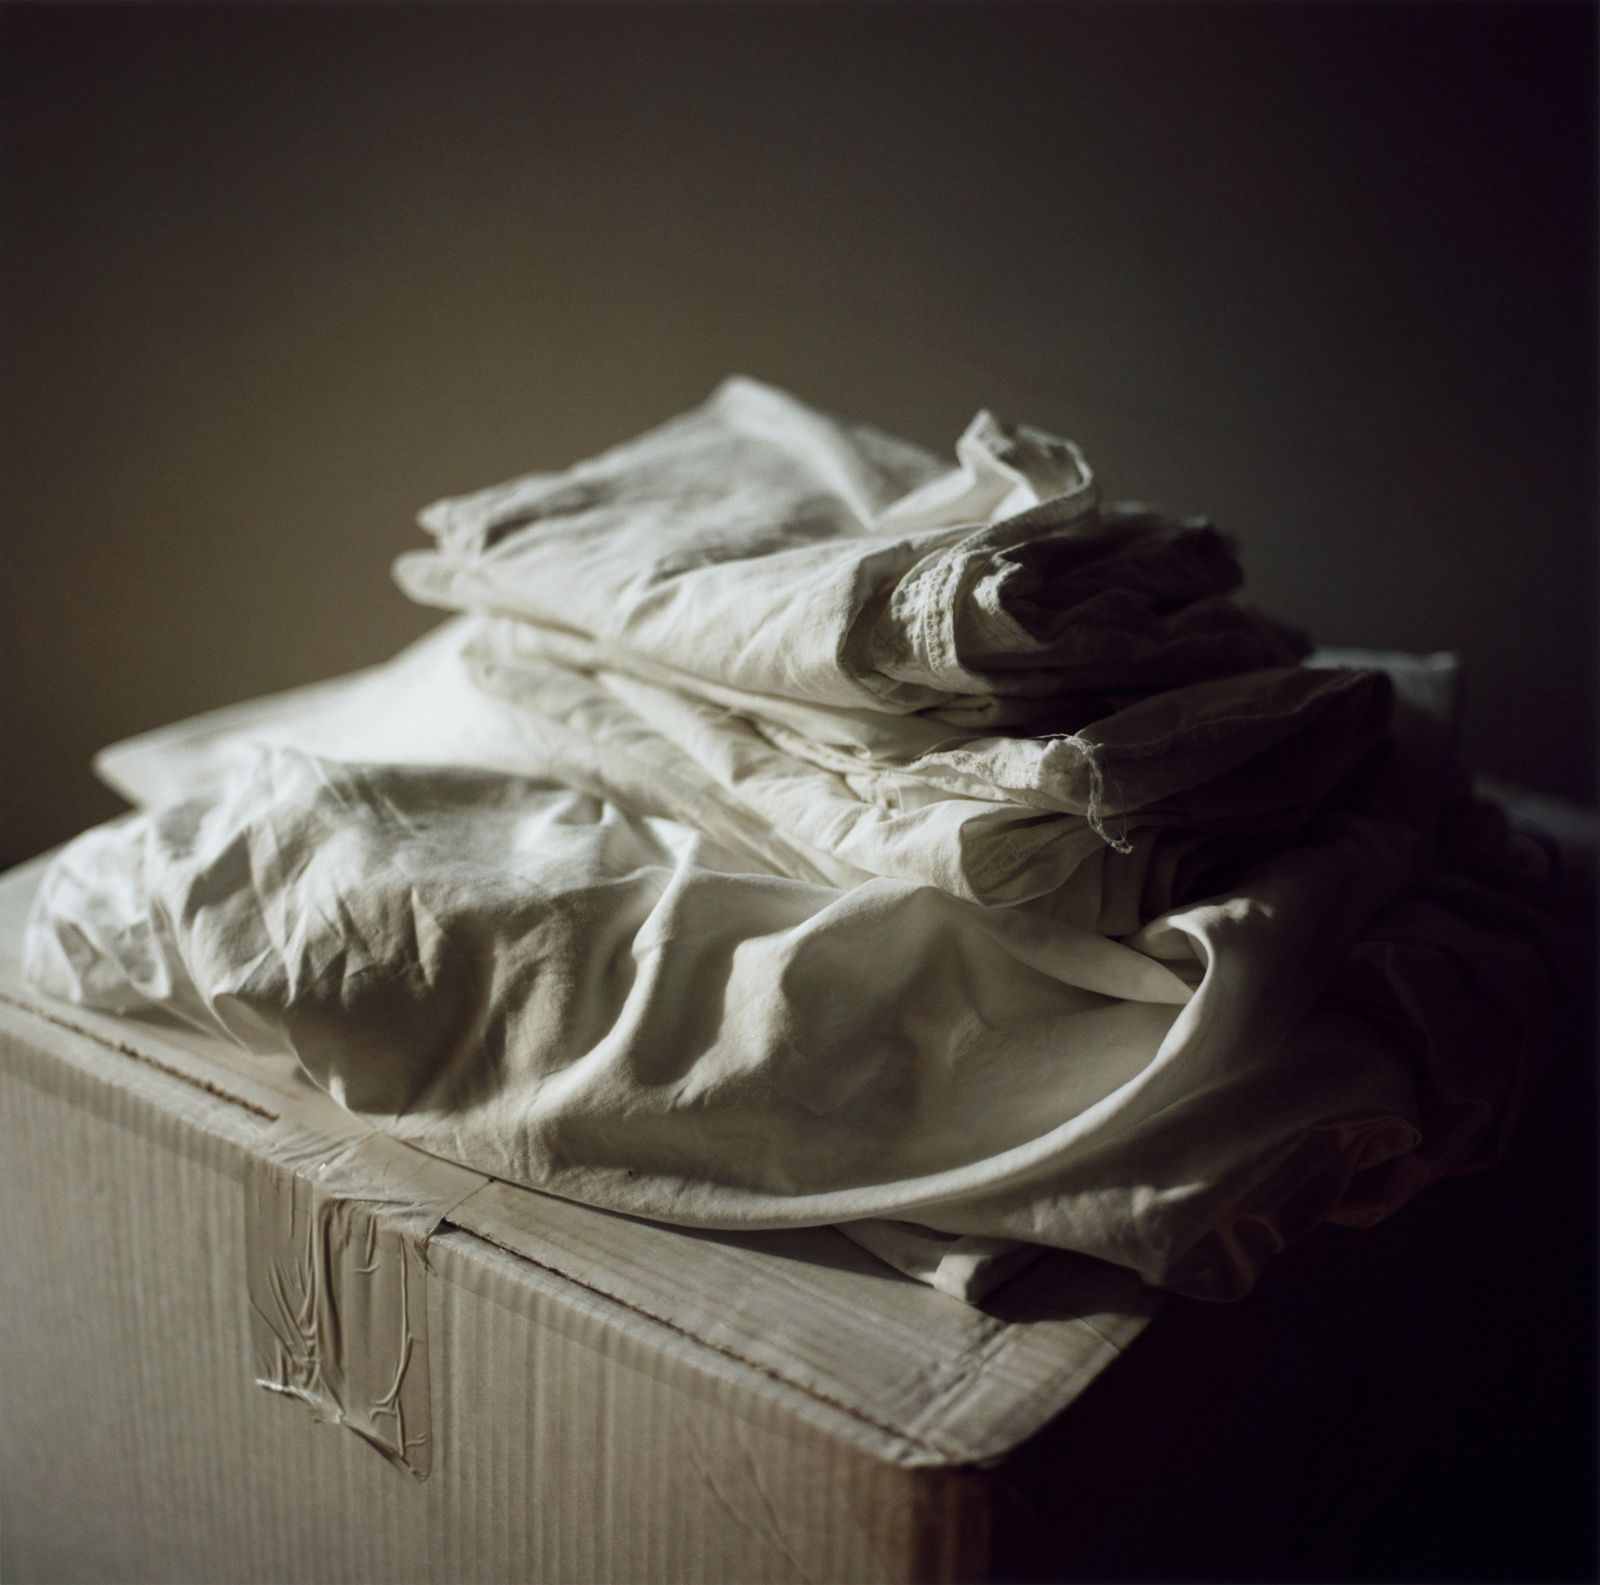 © Lydia Goldblatt - Image from the Fugue photography project